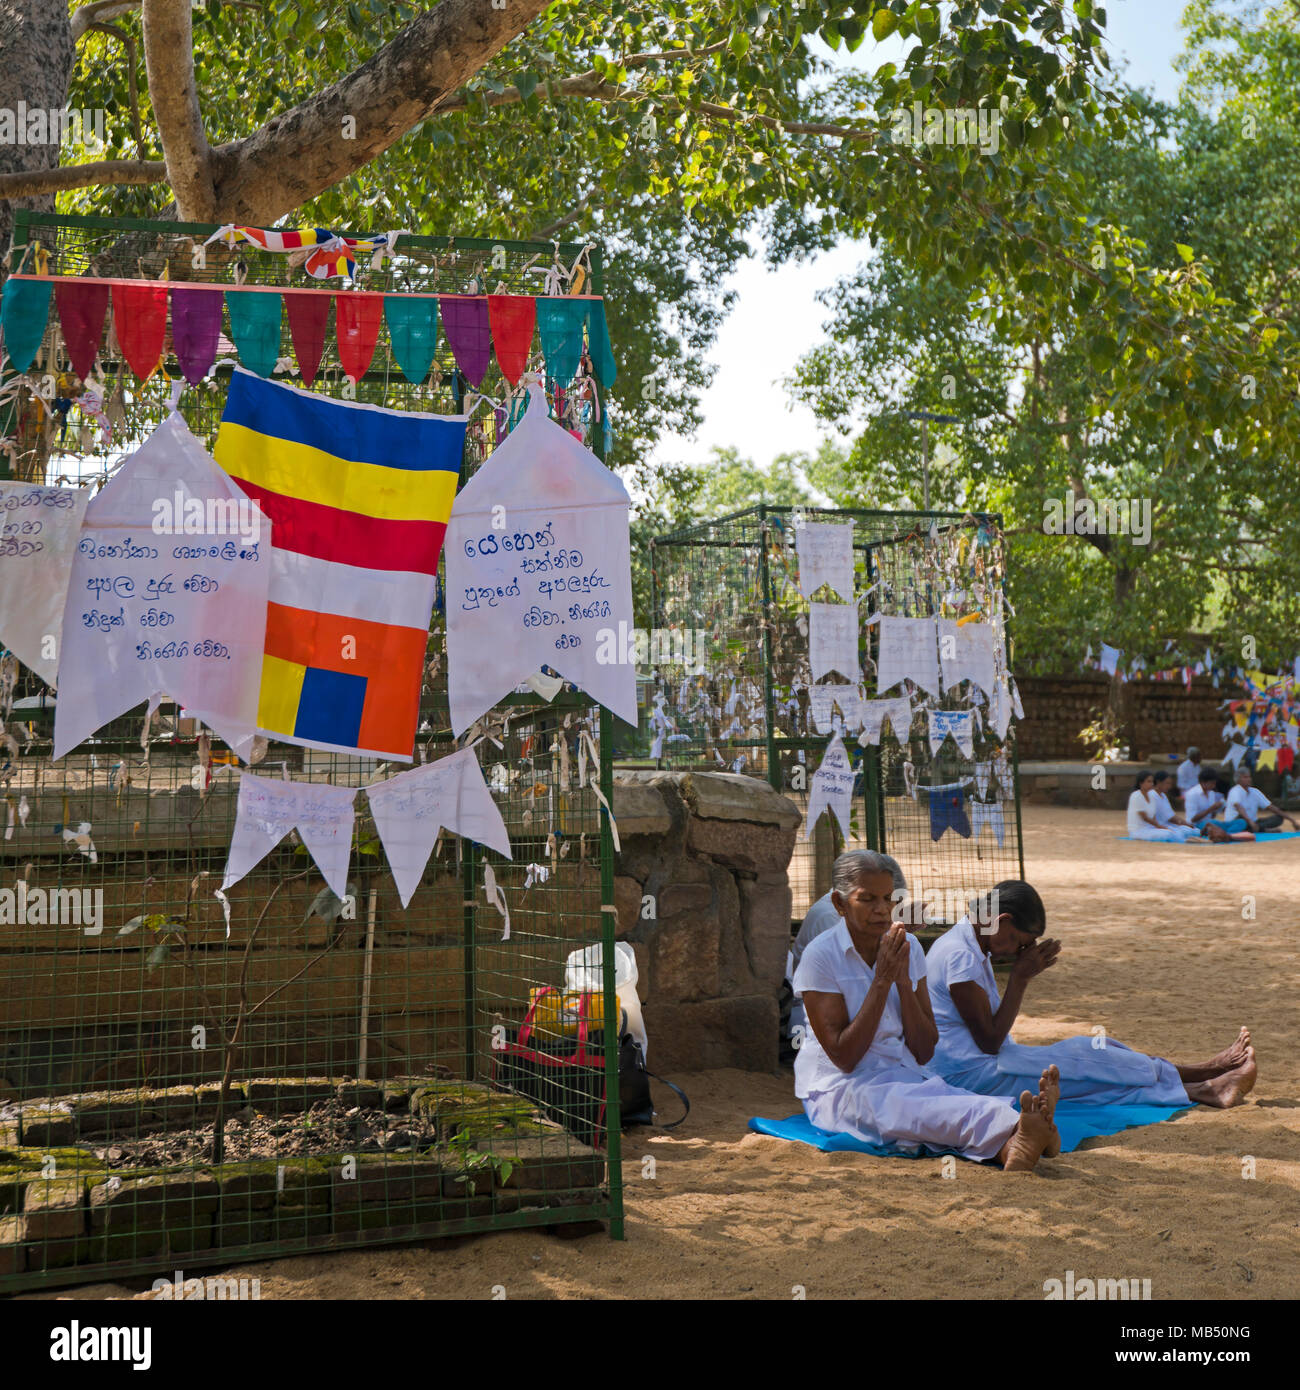 Square close up of people praying at the Bodhi tree at Jaya Sri Maha Bodhi in Anuradhapura, Sri Lanka. Stock Photo